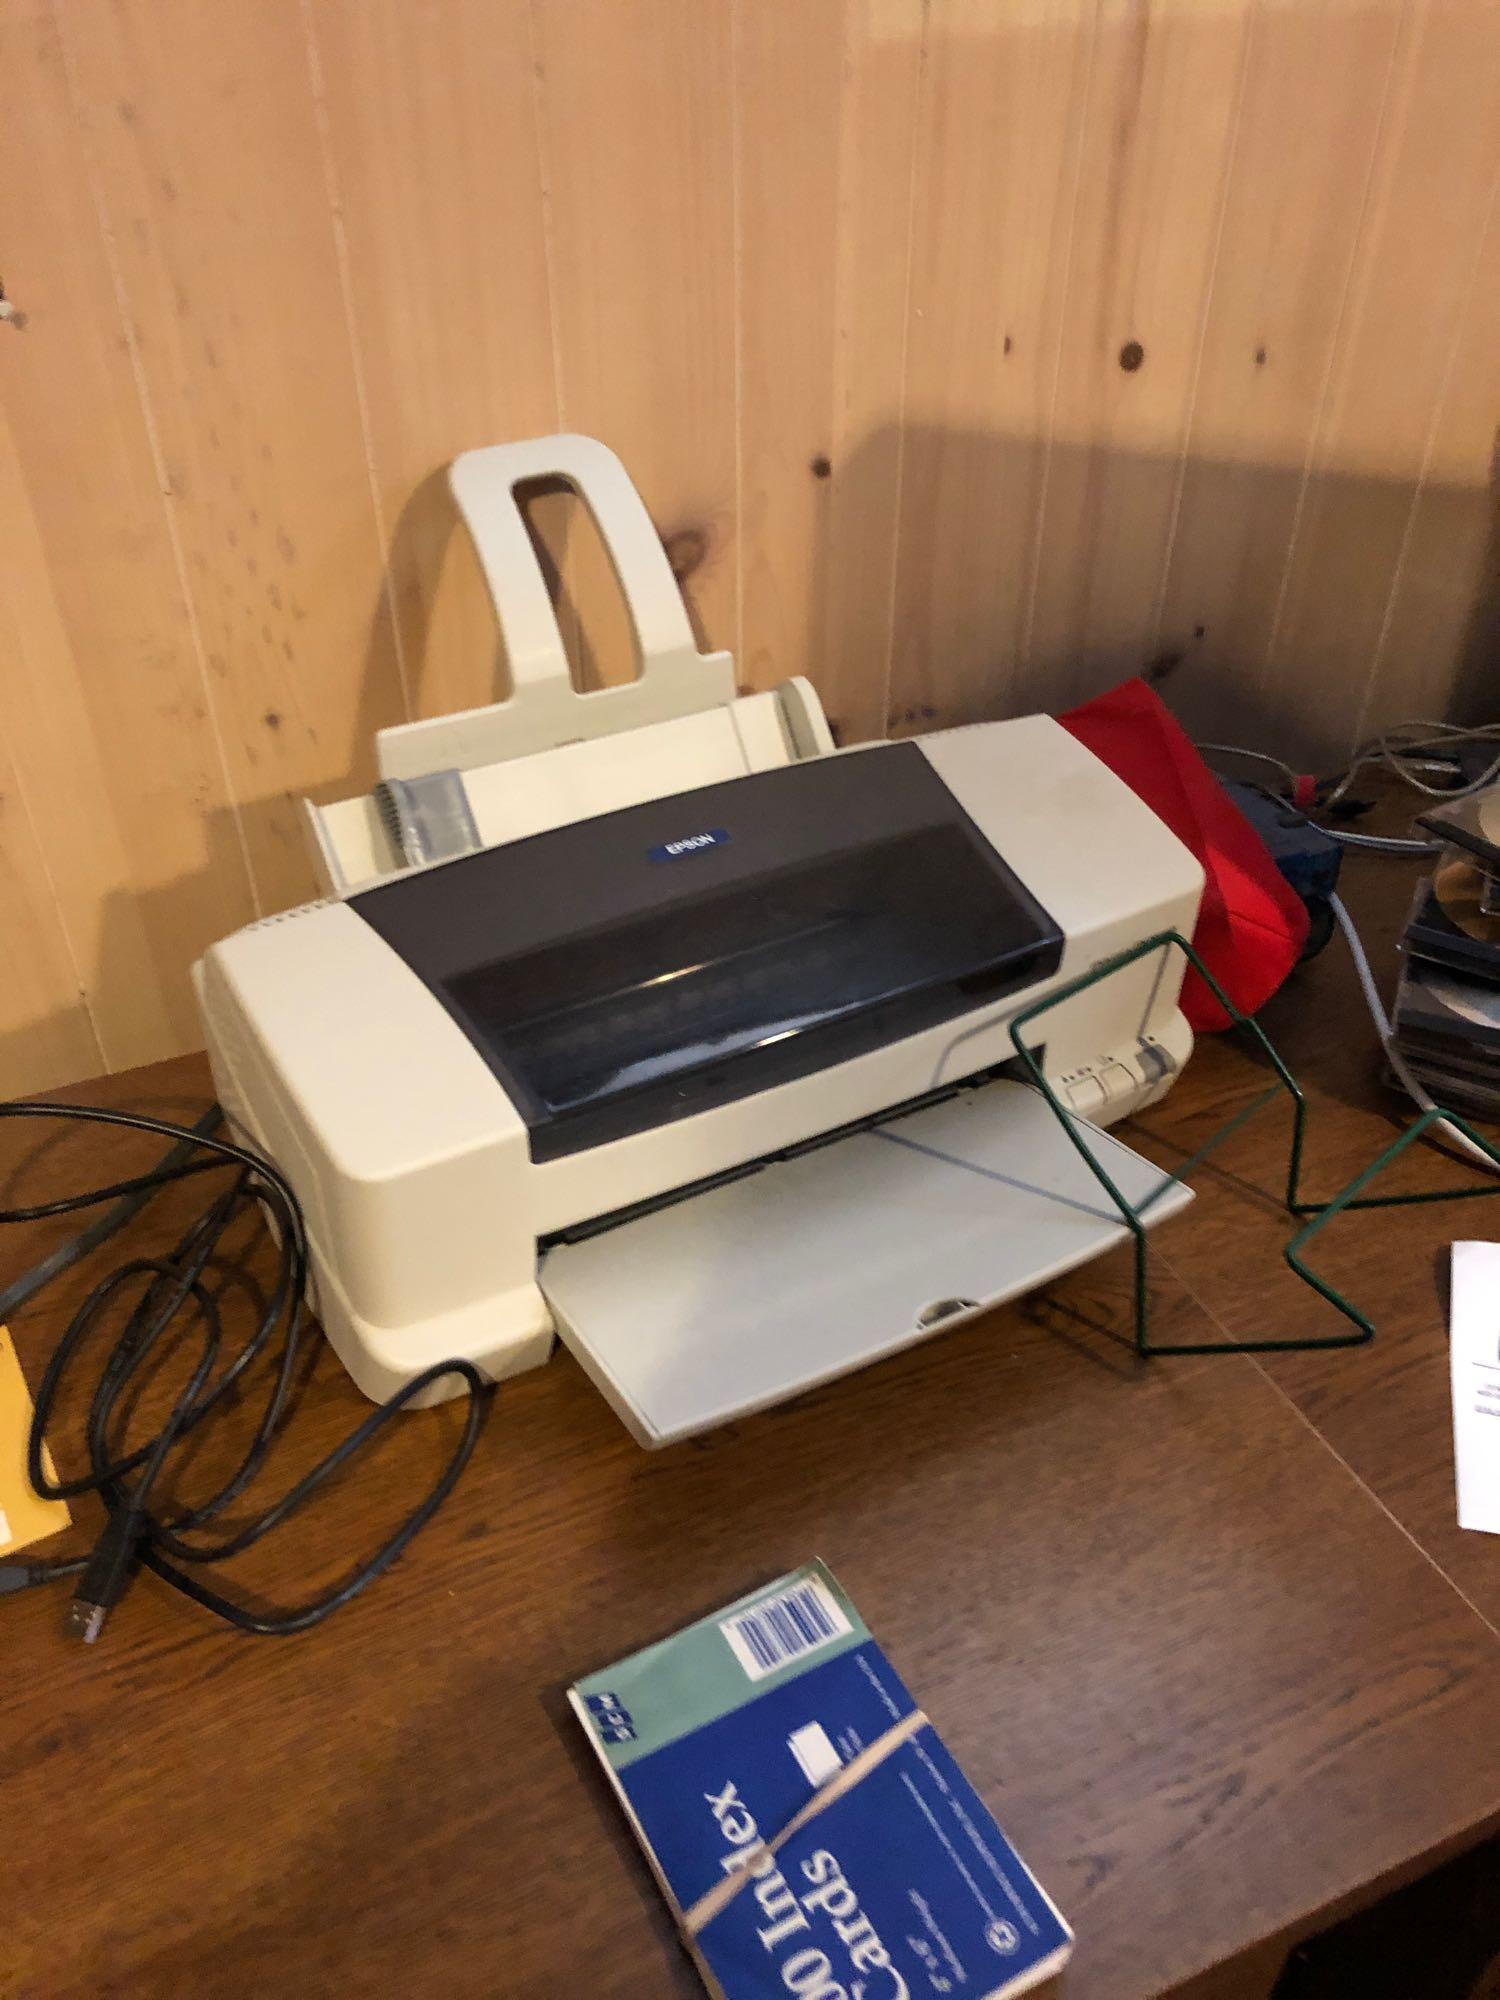 Apple computer, desk items and printer